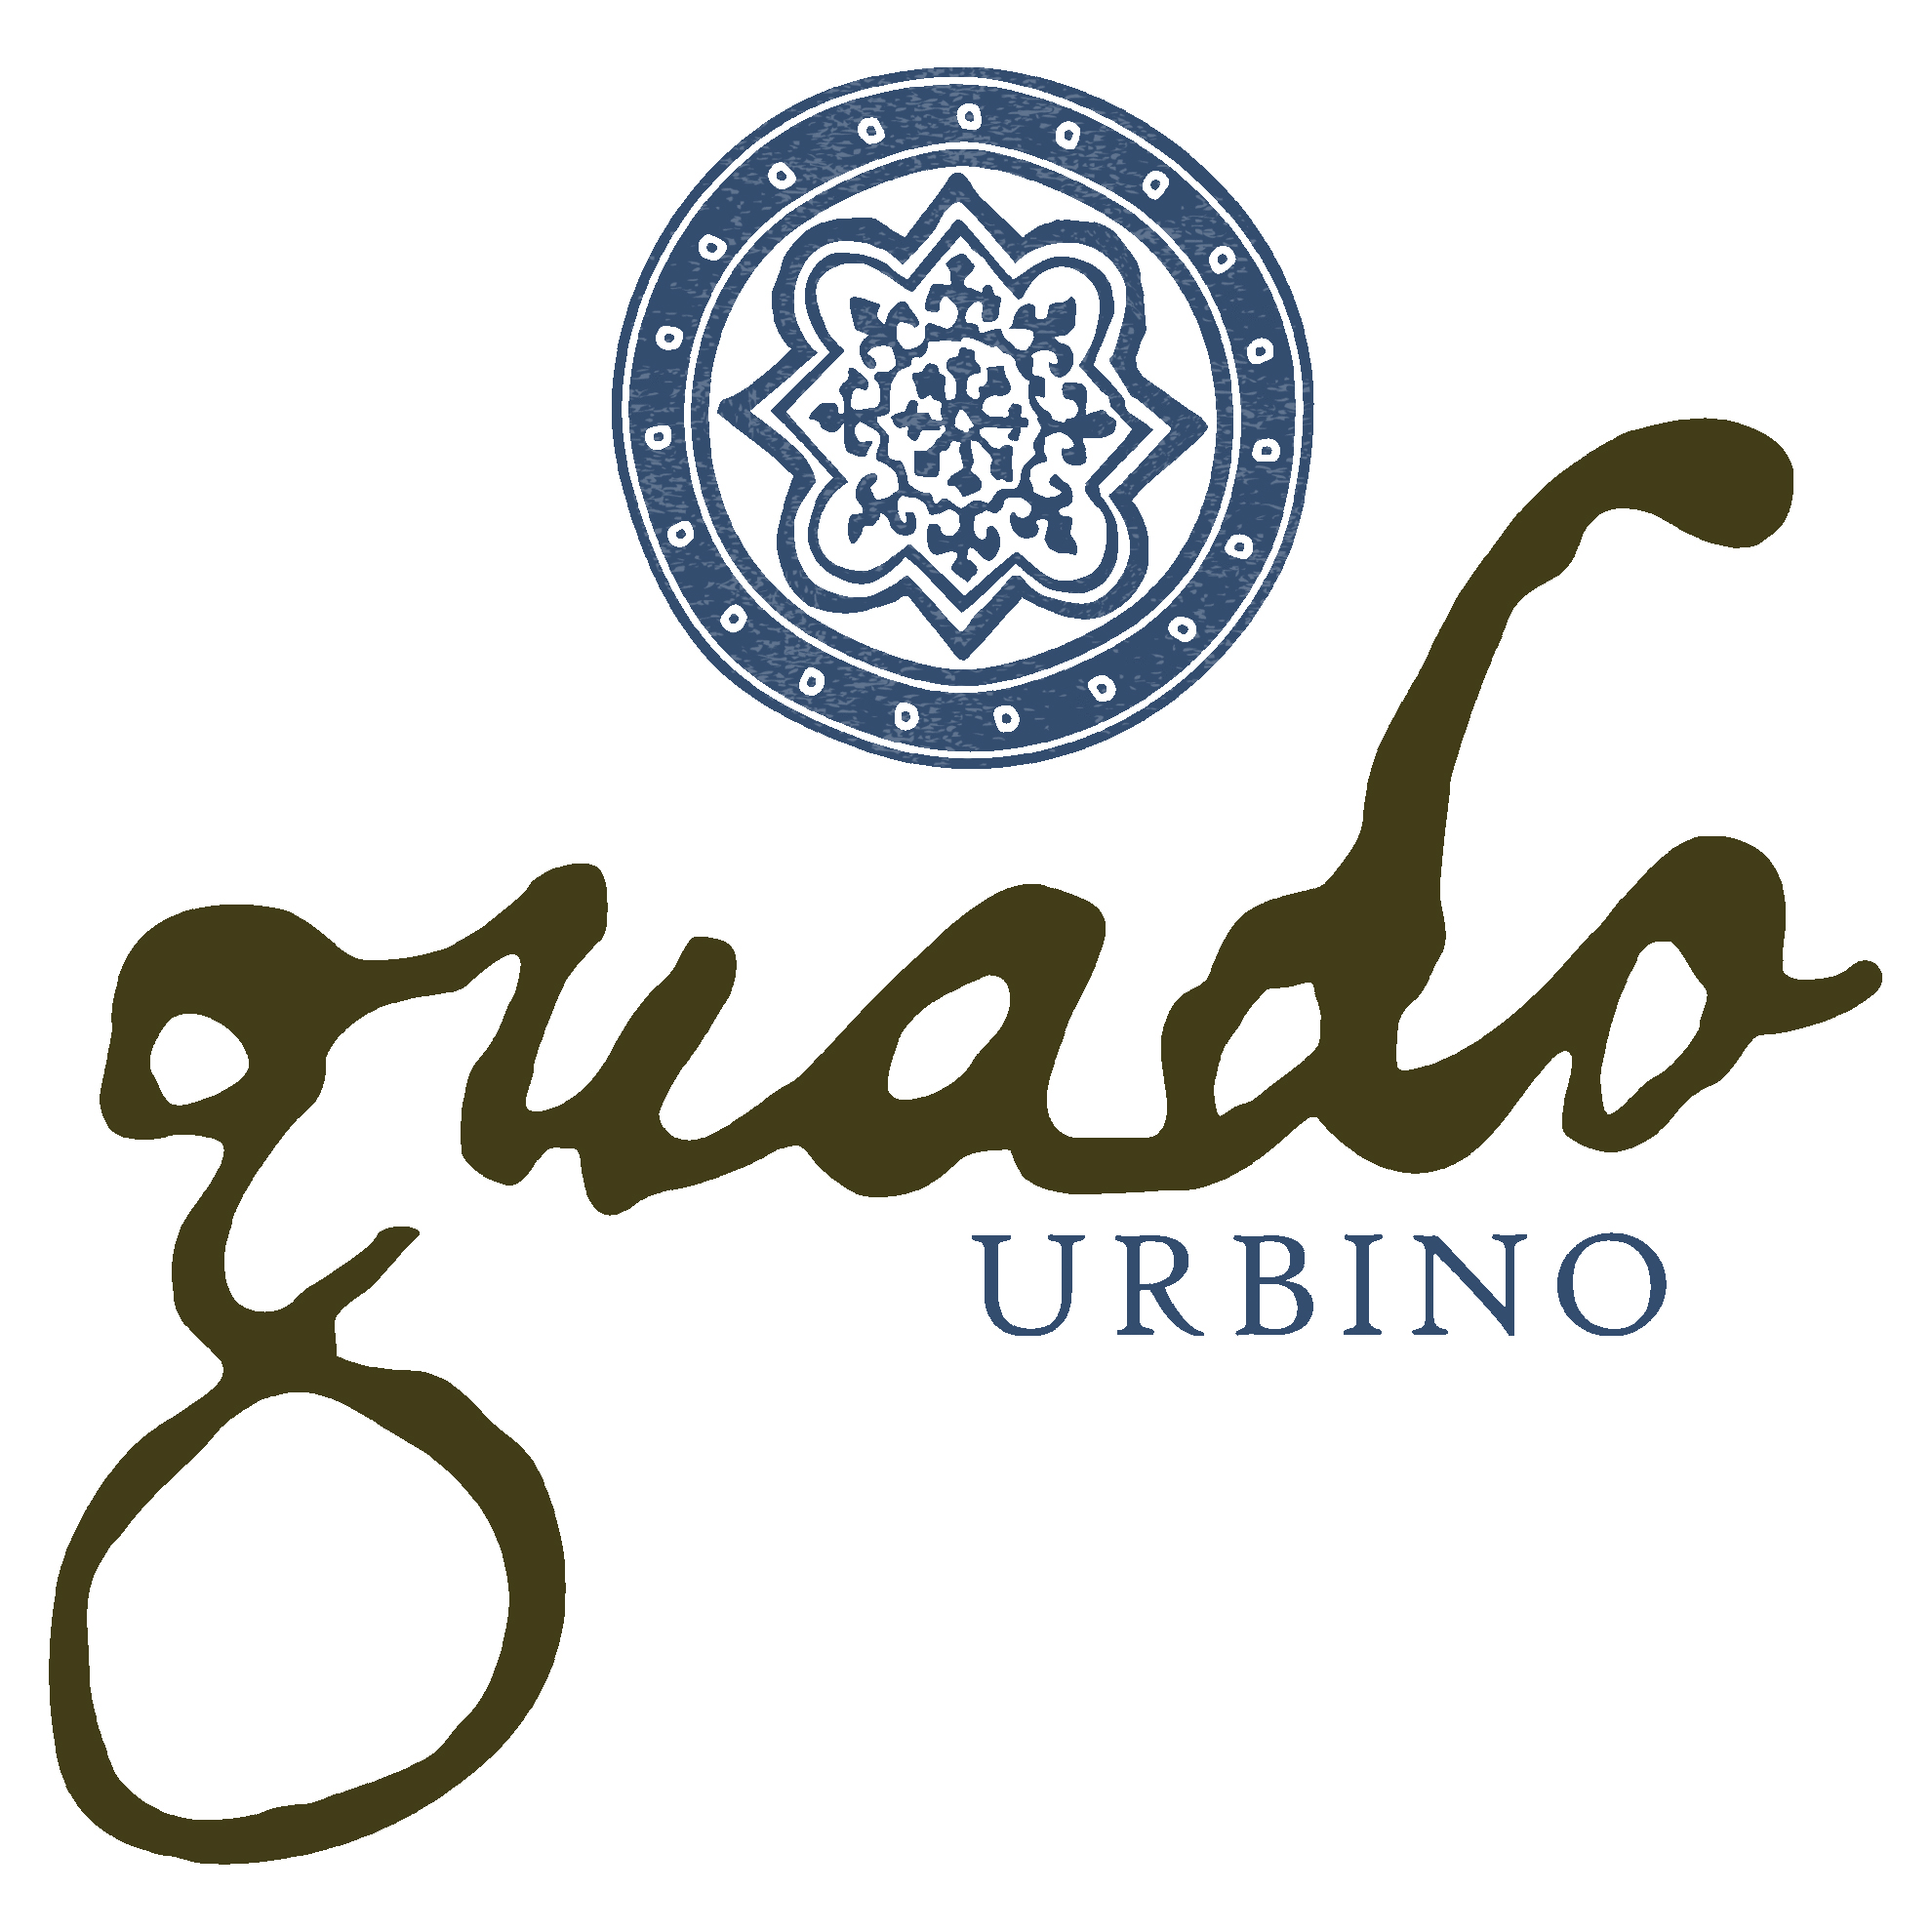 guado-urbino-weavers-and-fabric-decorators-urbino-pesaro-e-urbino-profile